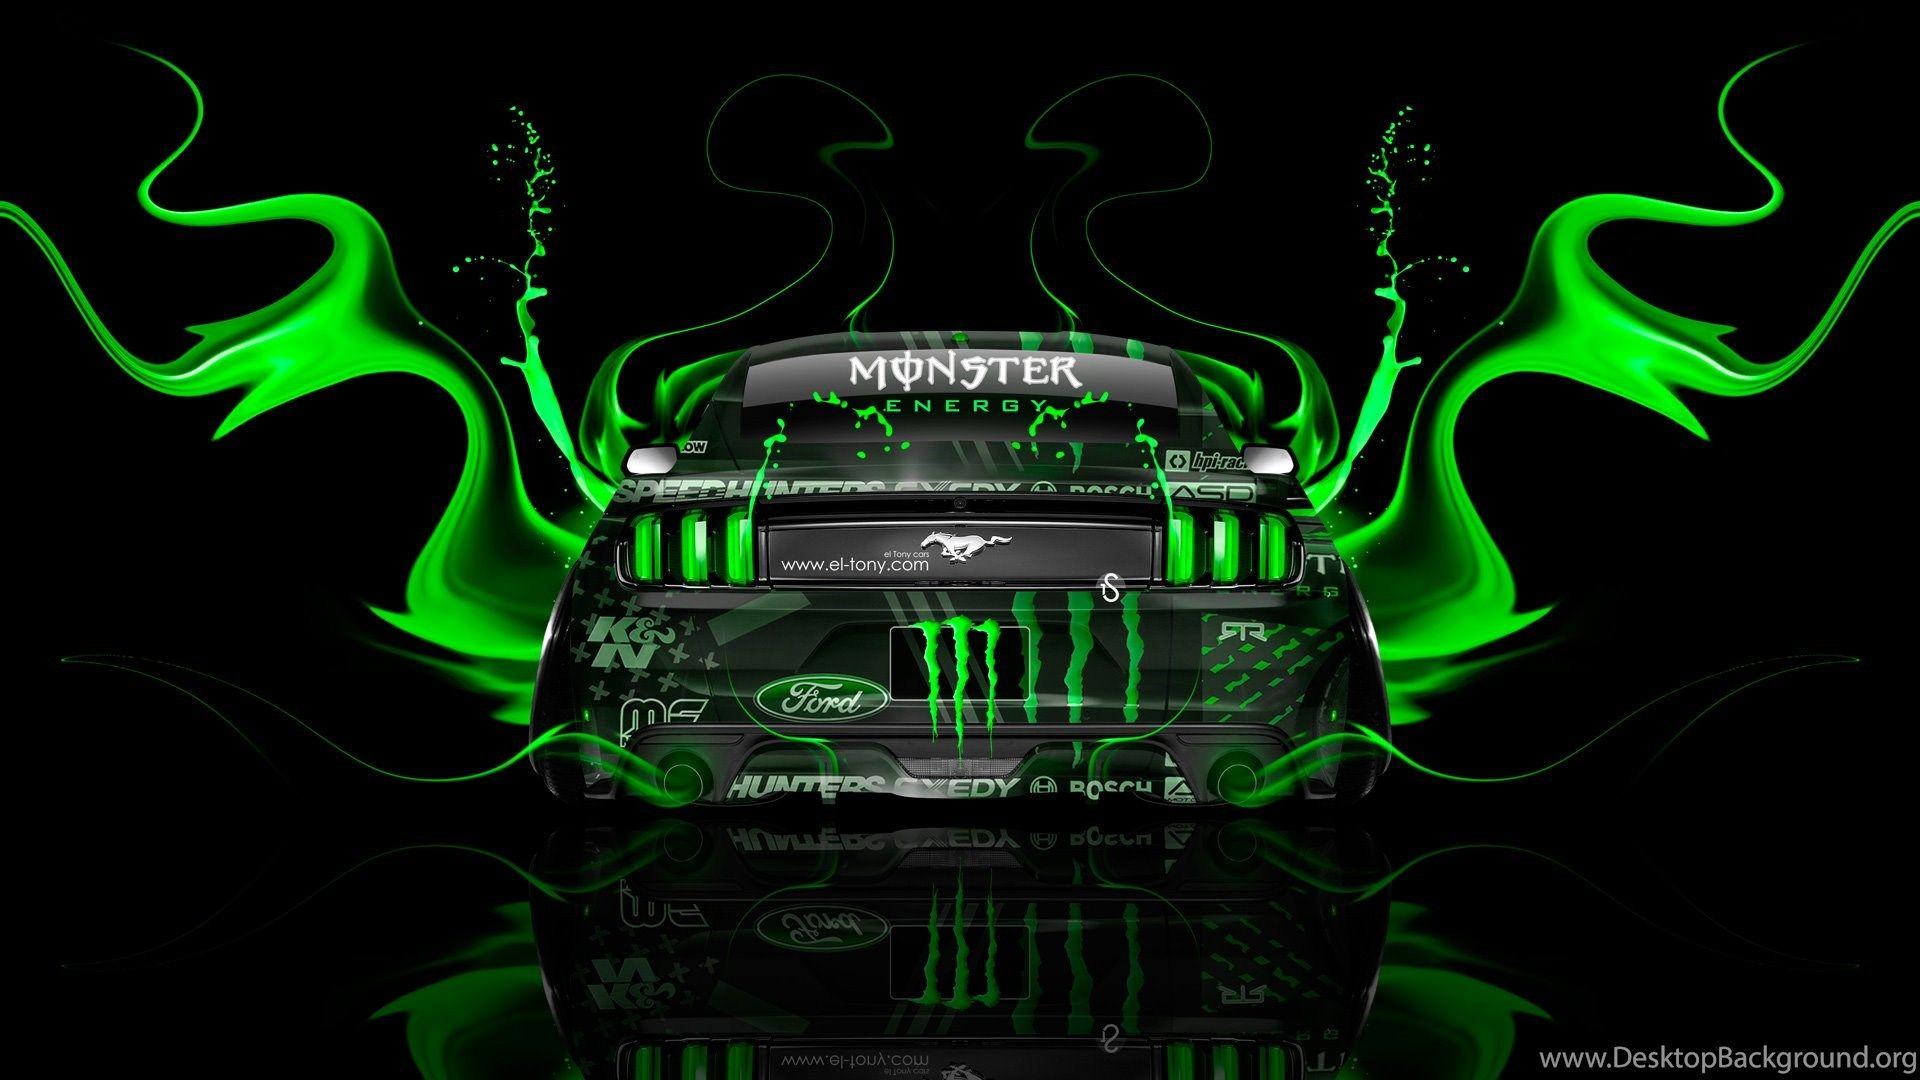 1920x1080 Green Monster Energy Wallpaper: Brands Wallpaper LocaLwom Desktop Background